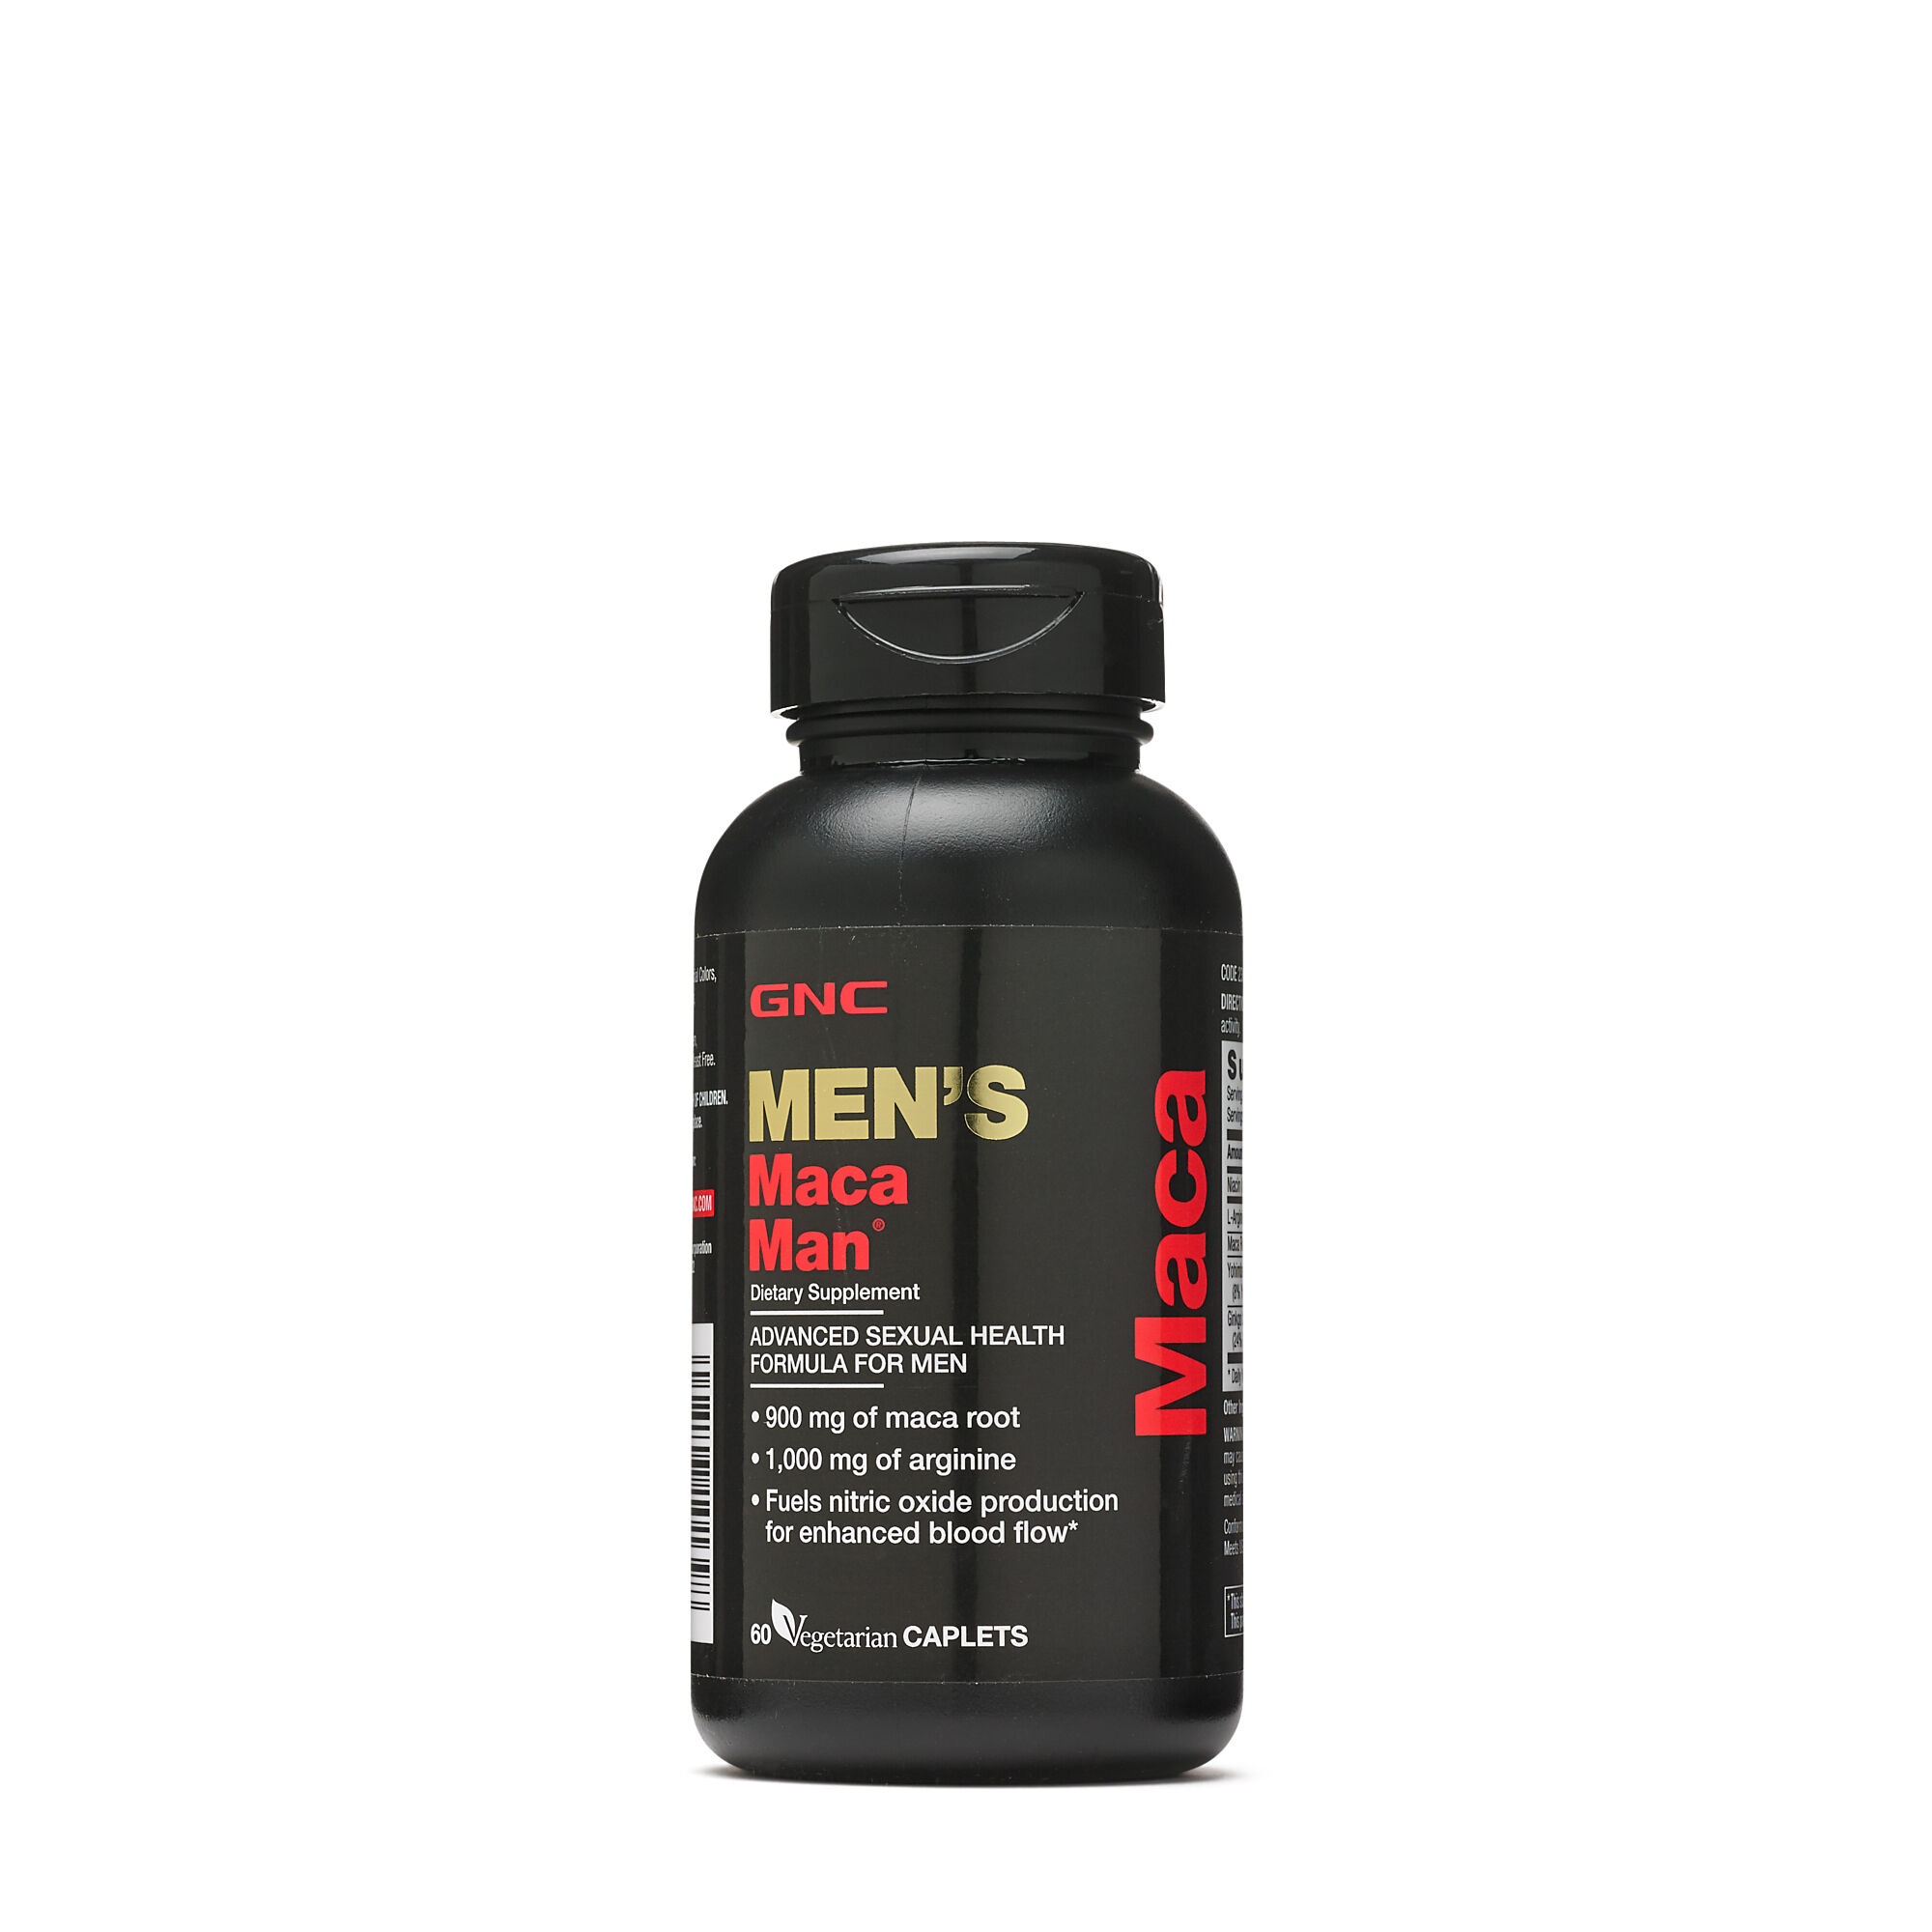 Amazon.com : Black Maca Root Powder- Organic, Non-GMO. Peruvian Maca for Men & Women. 100% Pure: No Additives, Fillers or Preservatives. 4 oz Bag : Health & Household